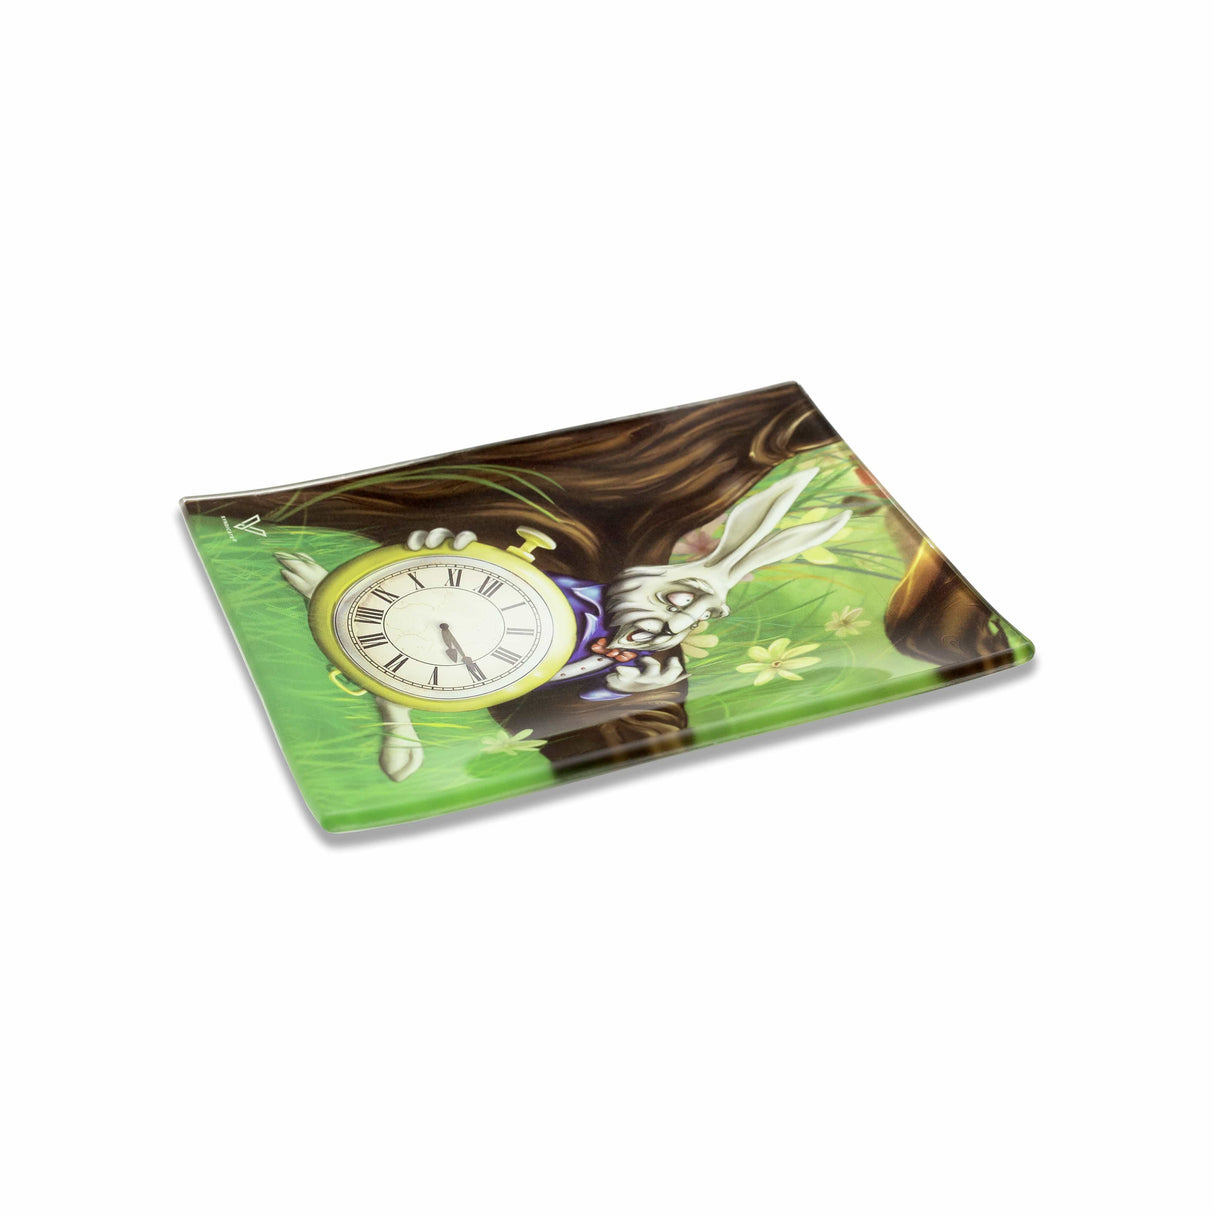 V Syndicate White Rabbit Glass Tray - Medium Size - Novelty Design with Clock